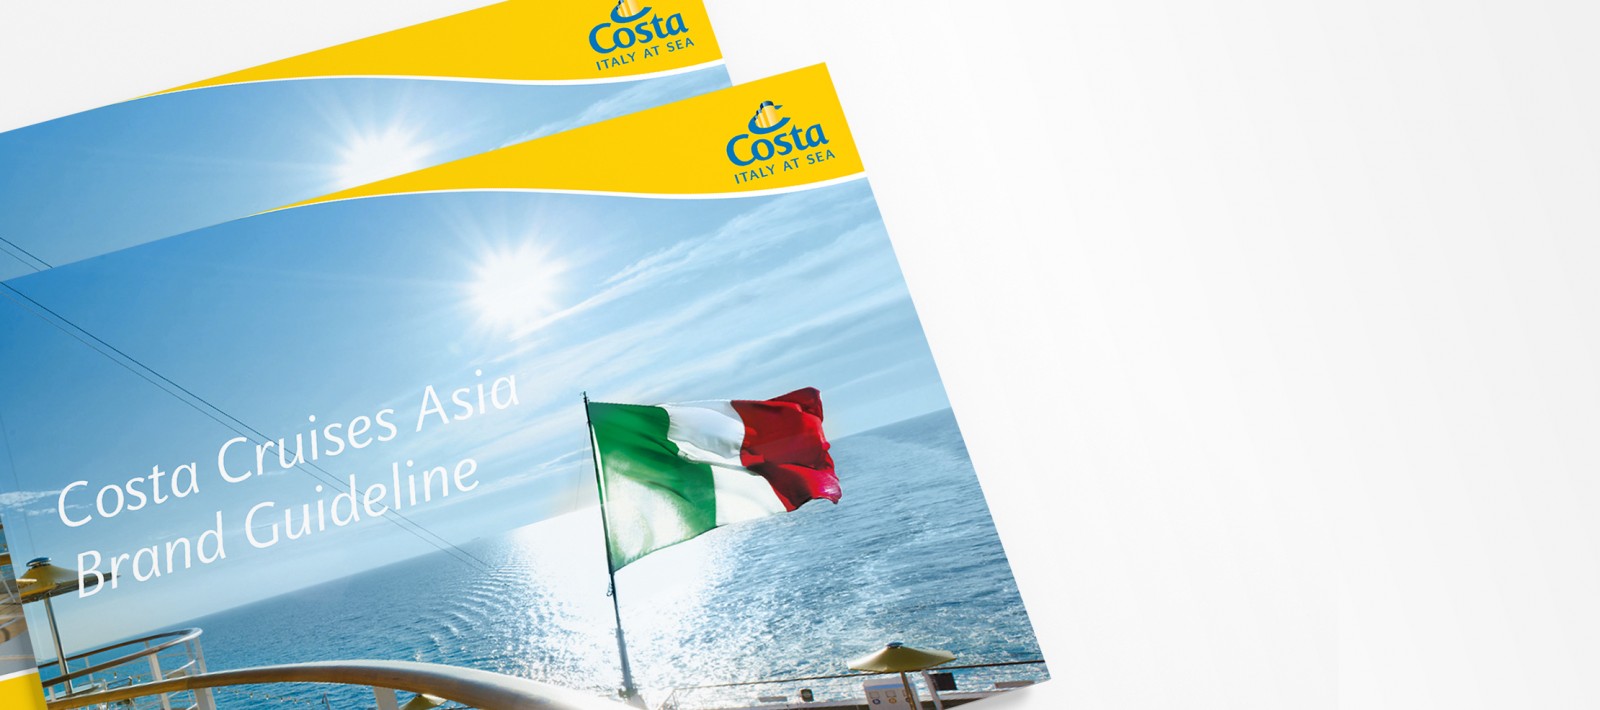 Brand book design for Costa cruises